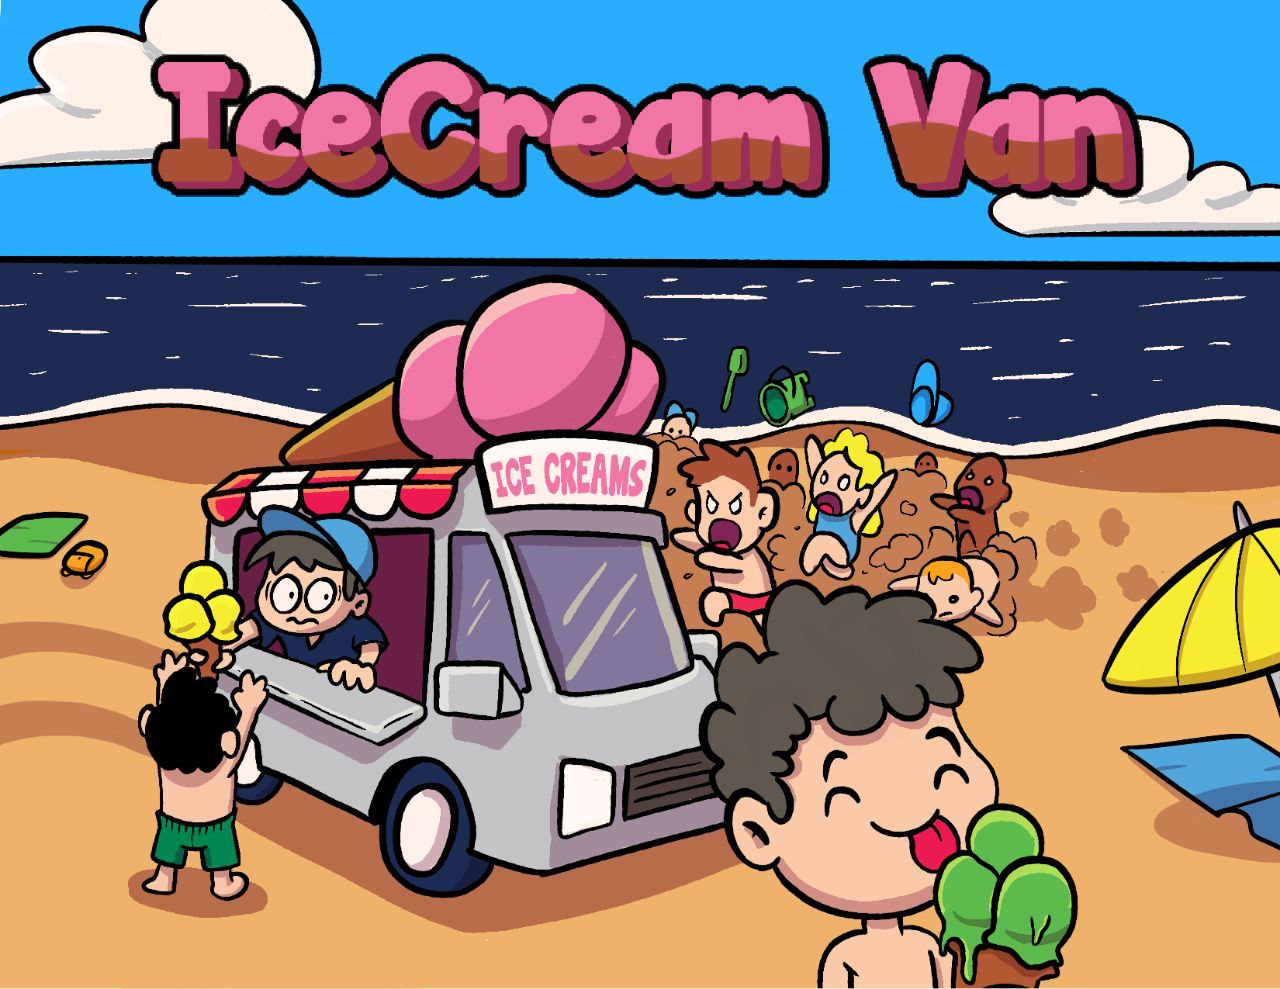 Play Bad Ice Cream 4 Game HTML5 on